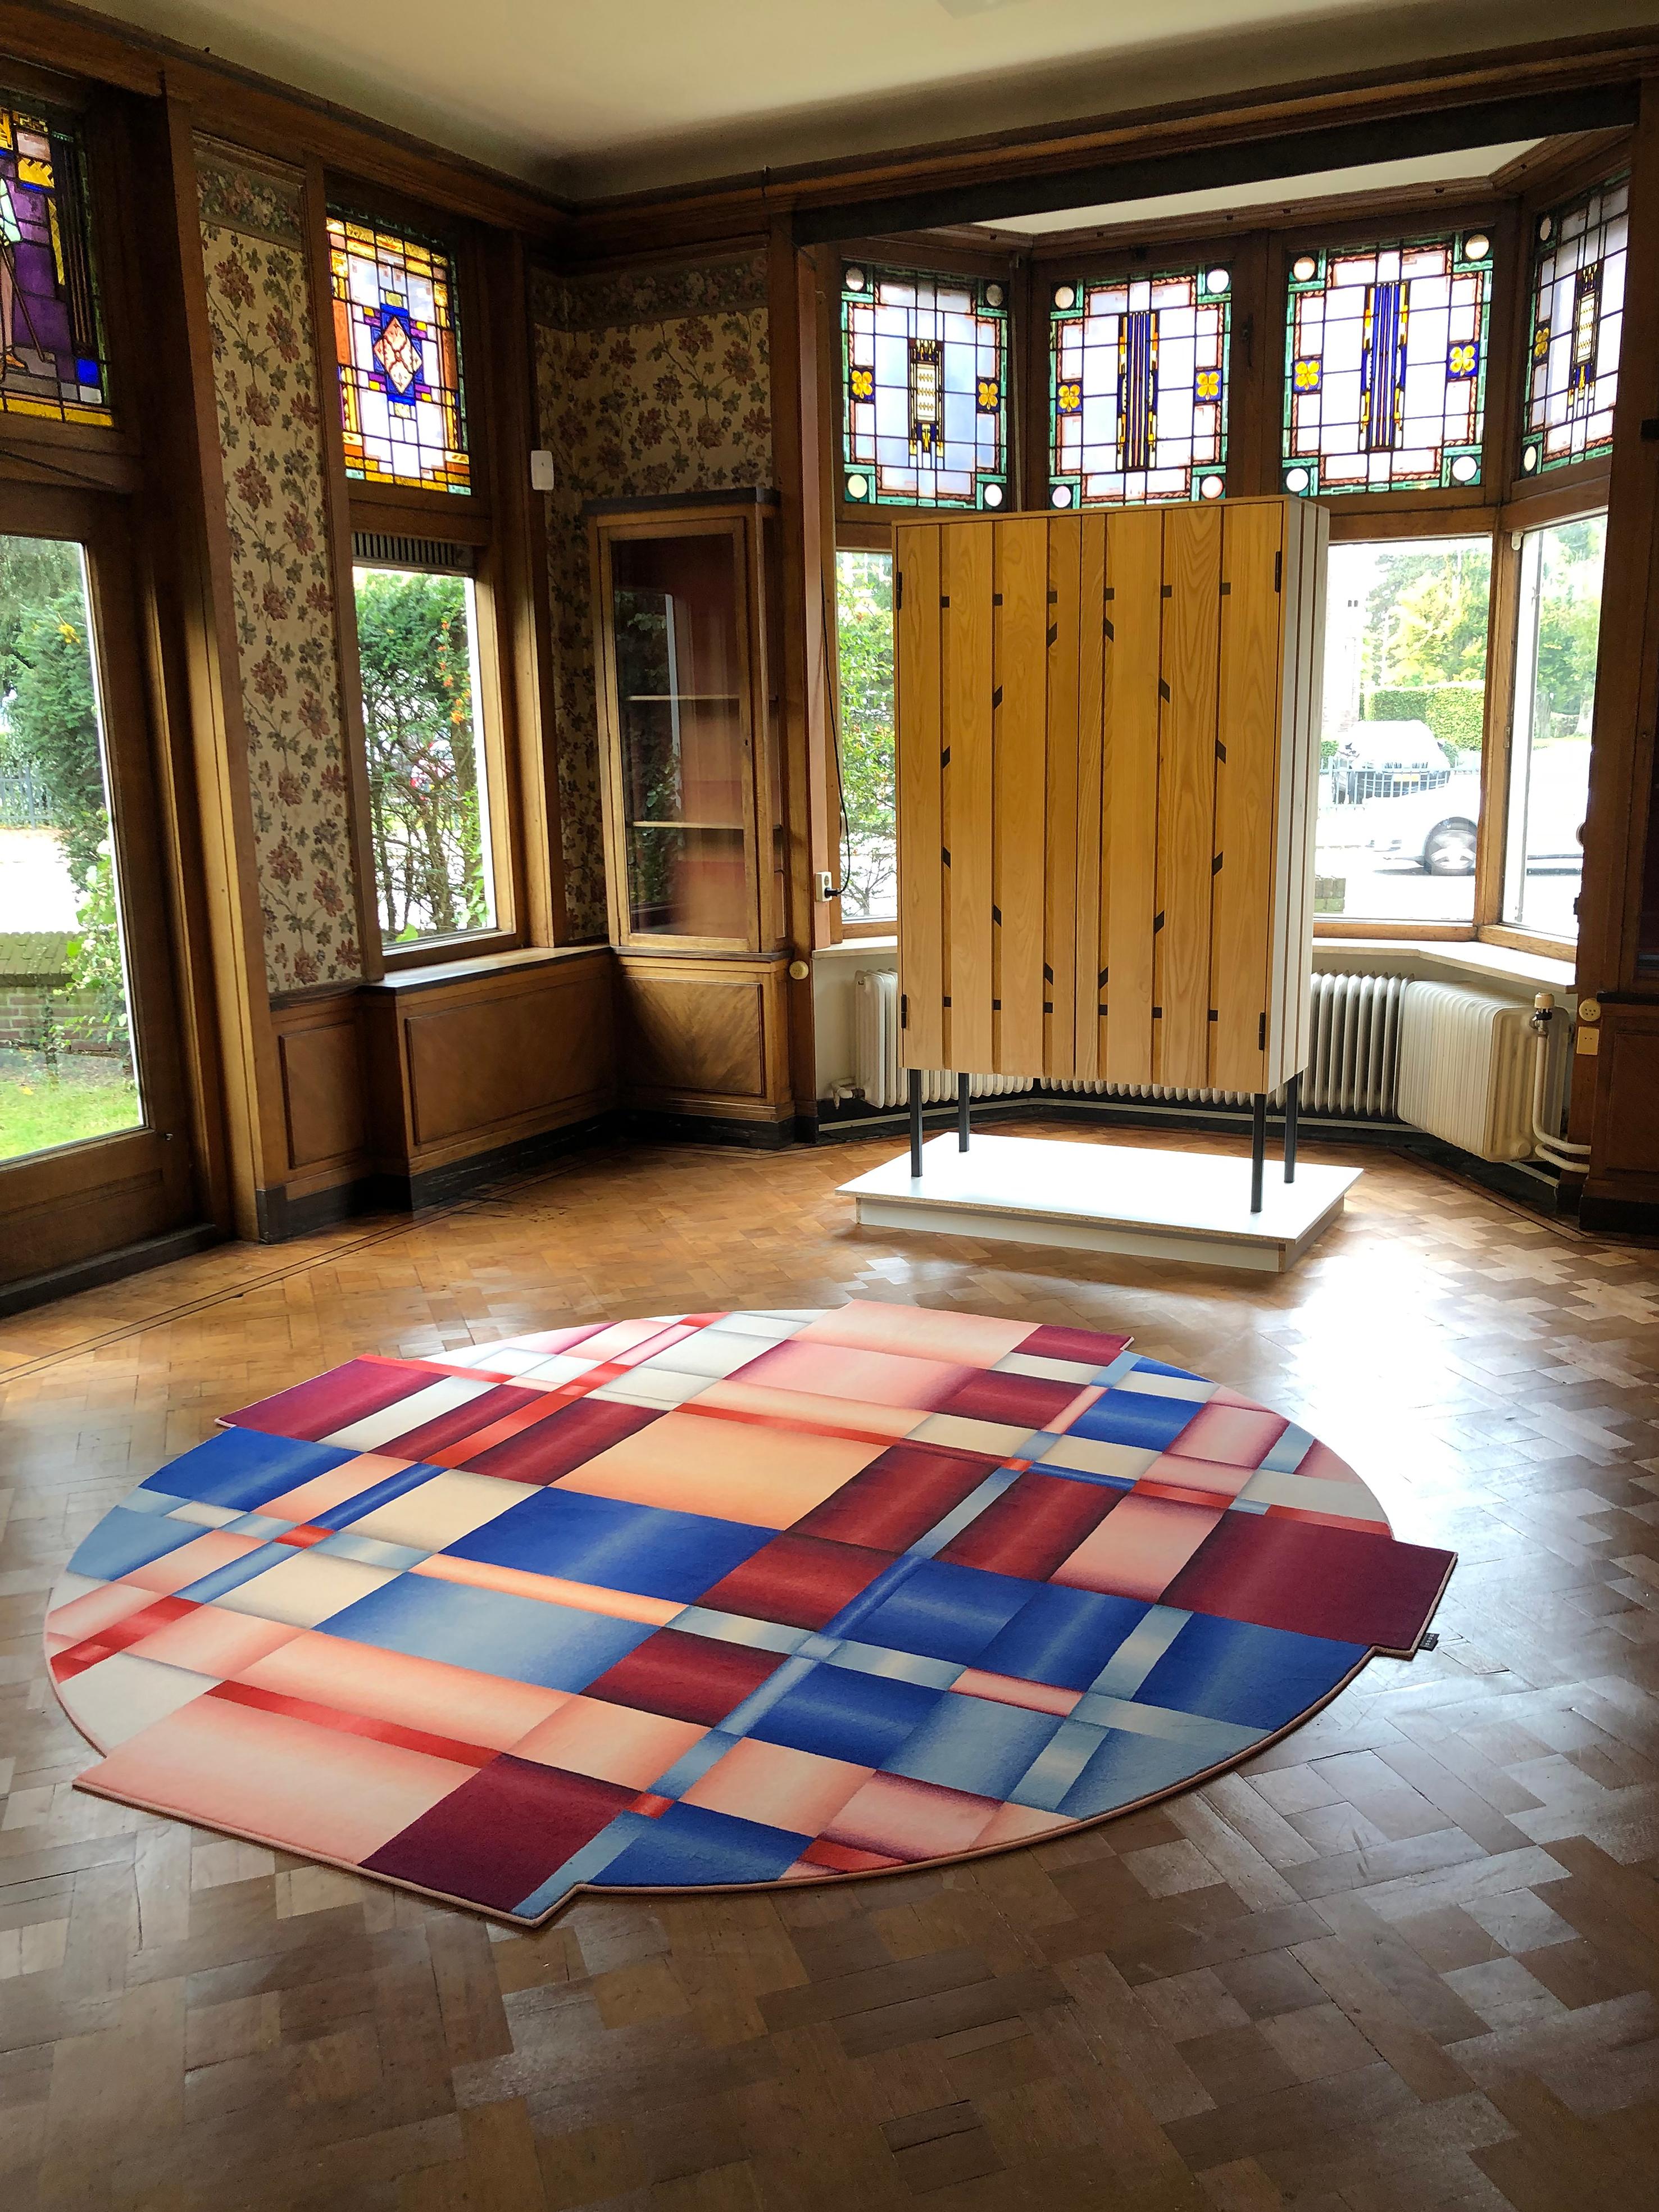 Moooi Lint magenta round rug in low pile polyamide by Visser & Meijwaard

Visser & Meijwaard is a designstudio focused on product- and scenographic exhibition design based in Arnhem, The Netherlands. The studio is run by Dutch designers Vera